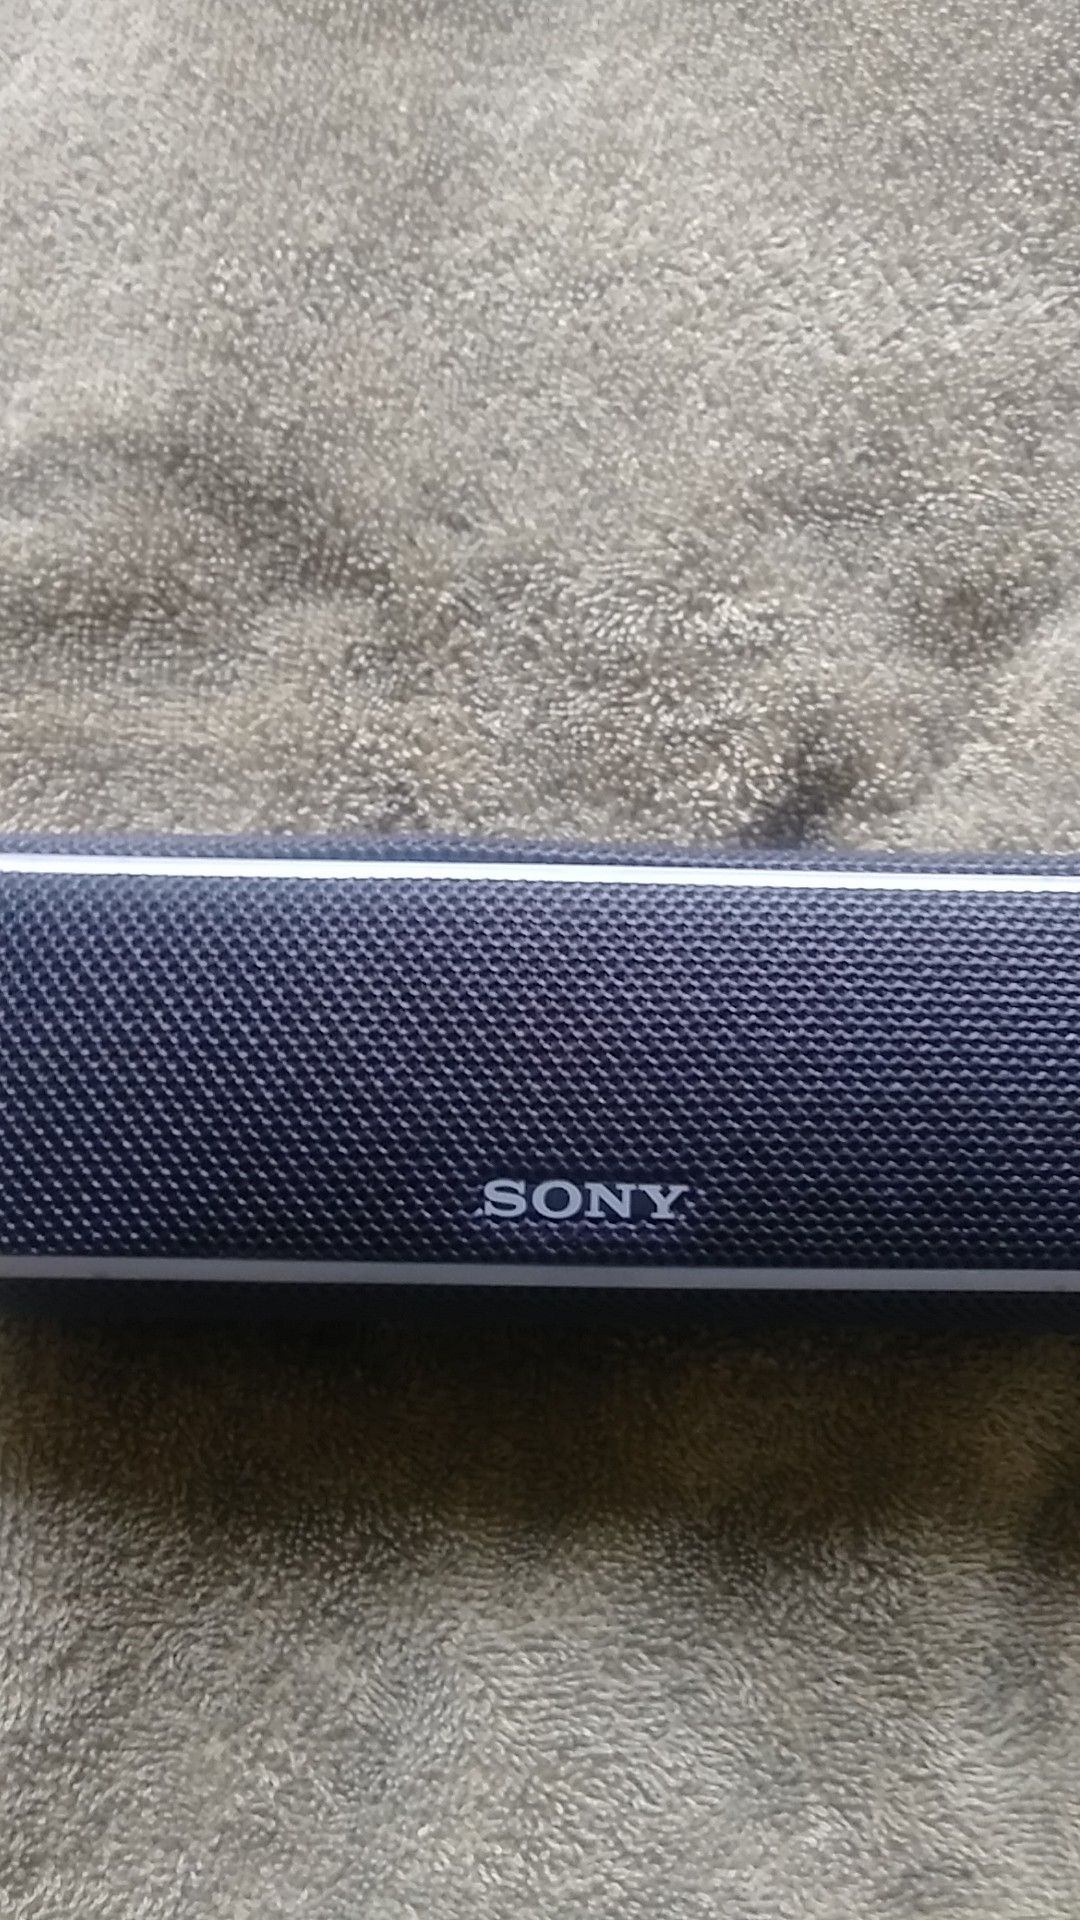 Sony SRS xb21 Bluetooth speaker won't turn on